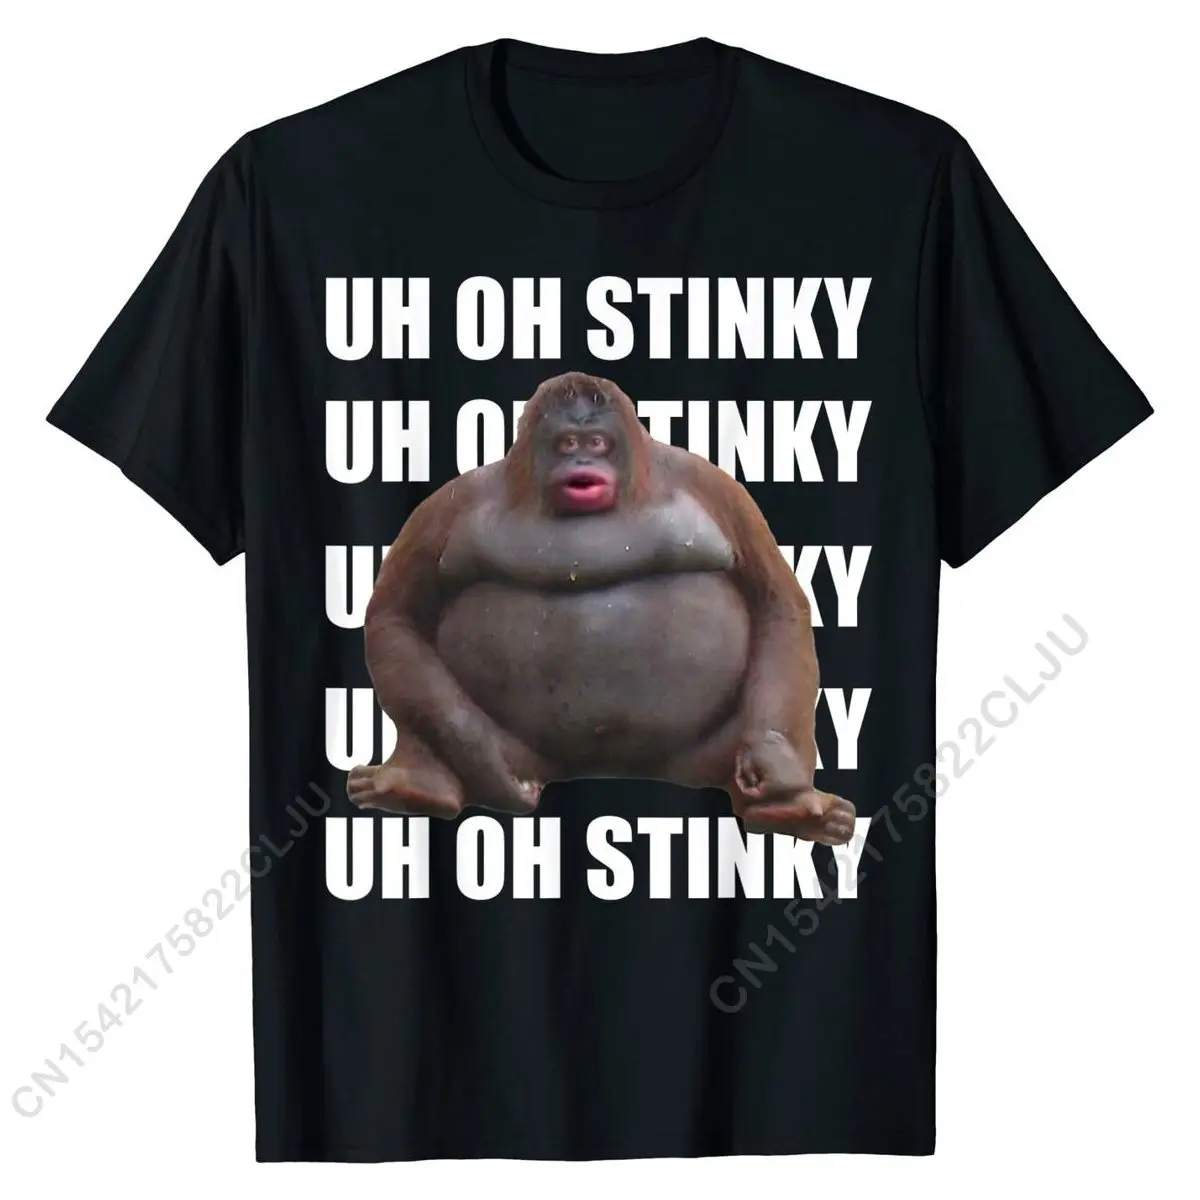 

Футболка Uh Oh Stinky Poop Wet Memes Le Monke, повседневные мужские топы, рубашки для мальчиков, купоны, хлопковая футболка на заказ